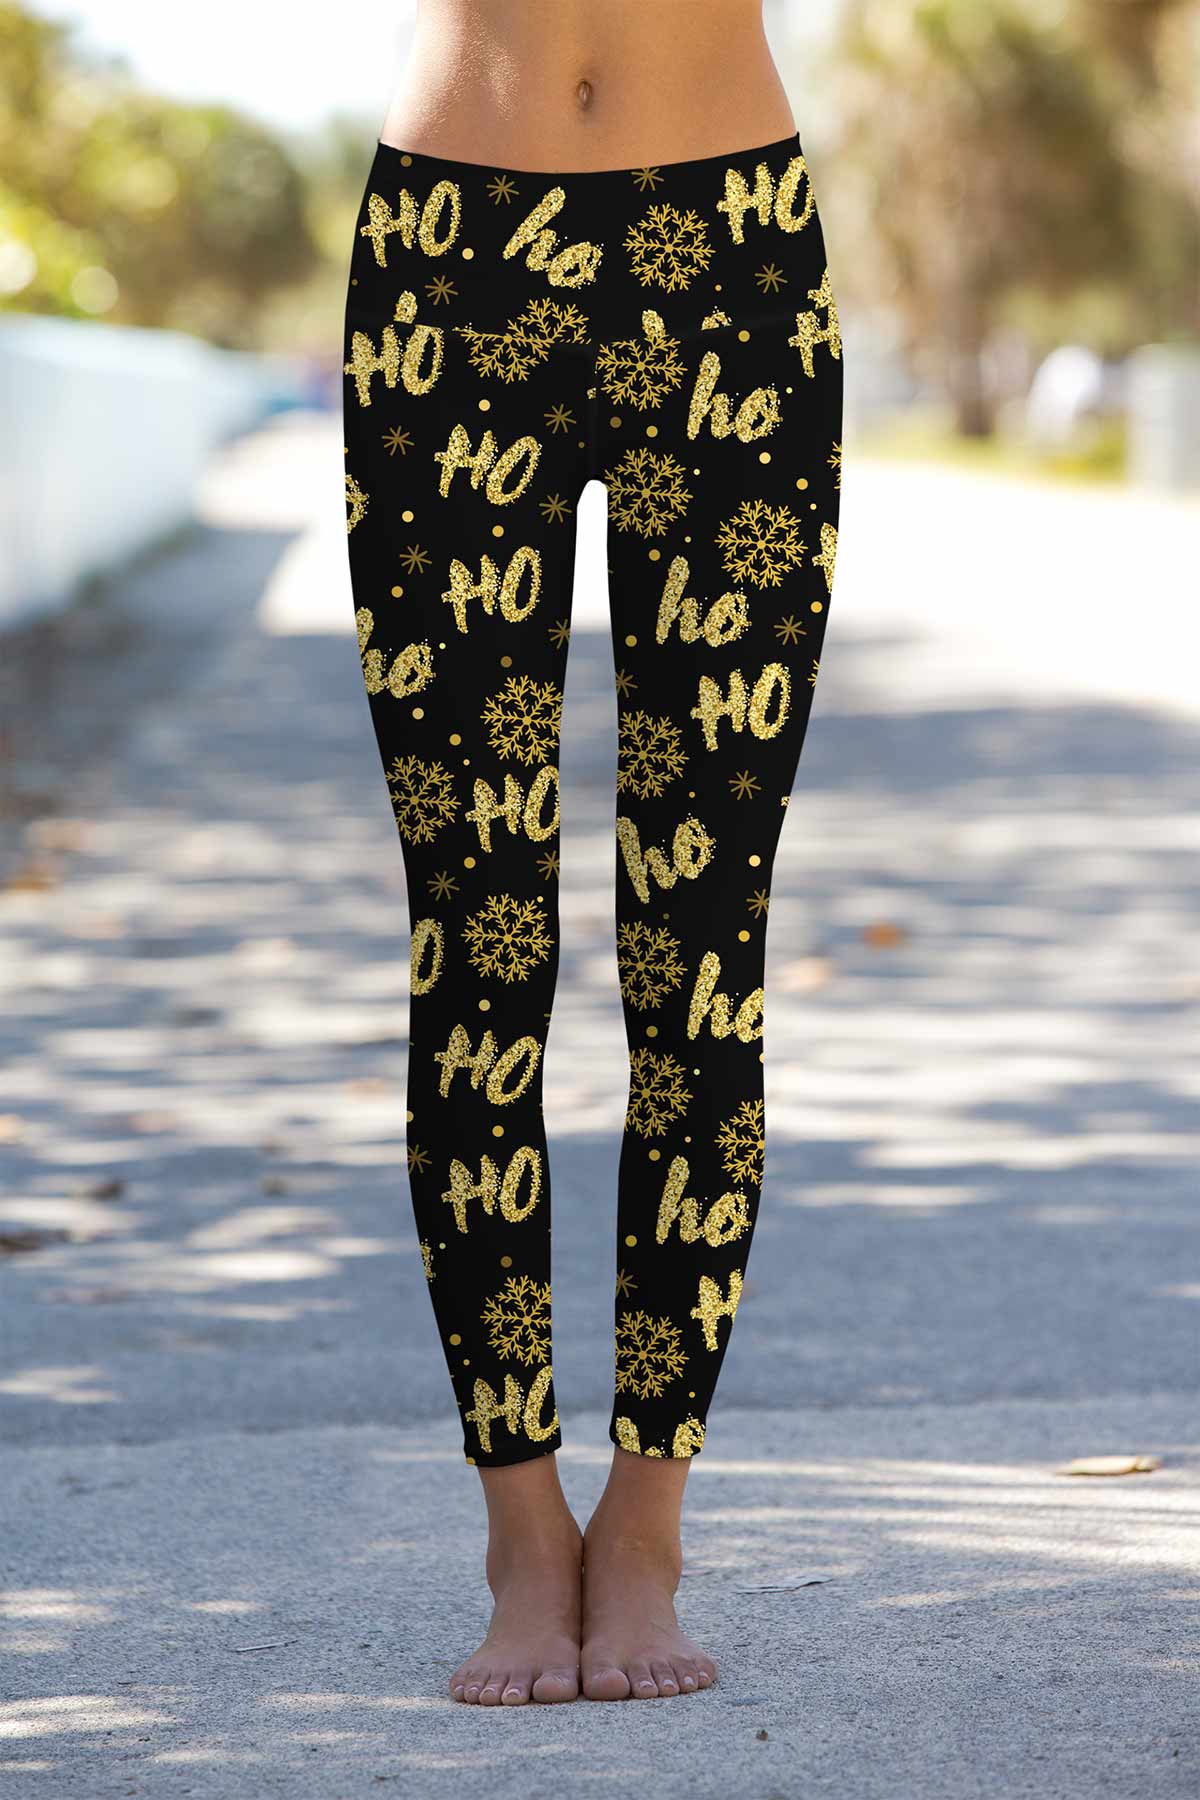 Hohoho Gold Lucy Black Glittering Printed Leggings Yoga Pants - Women - Pineapple Clothing